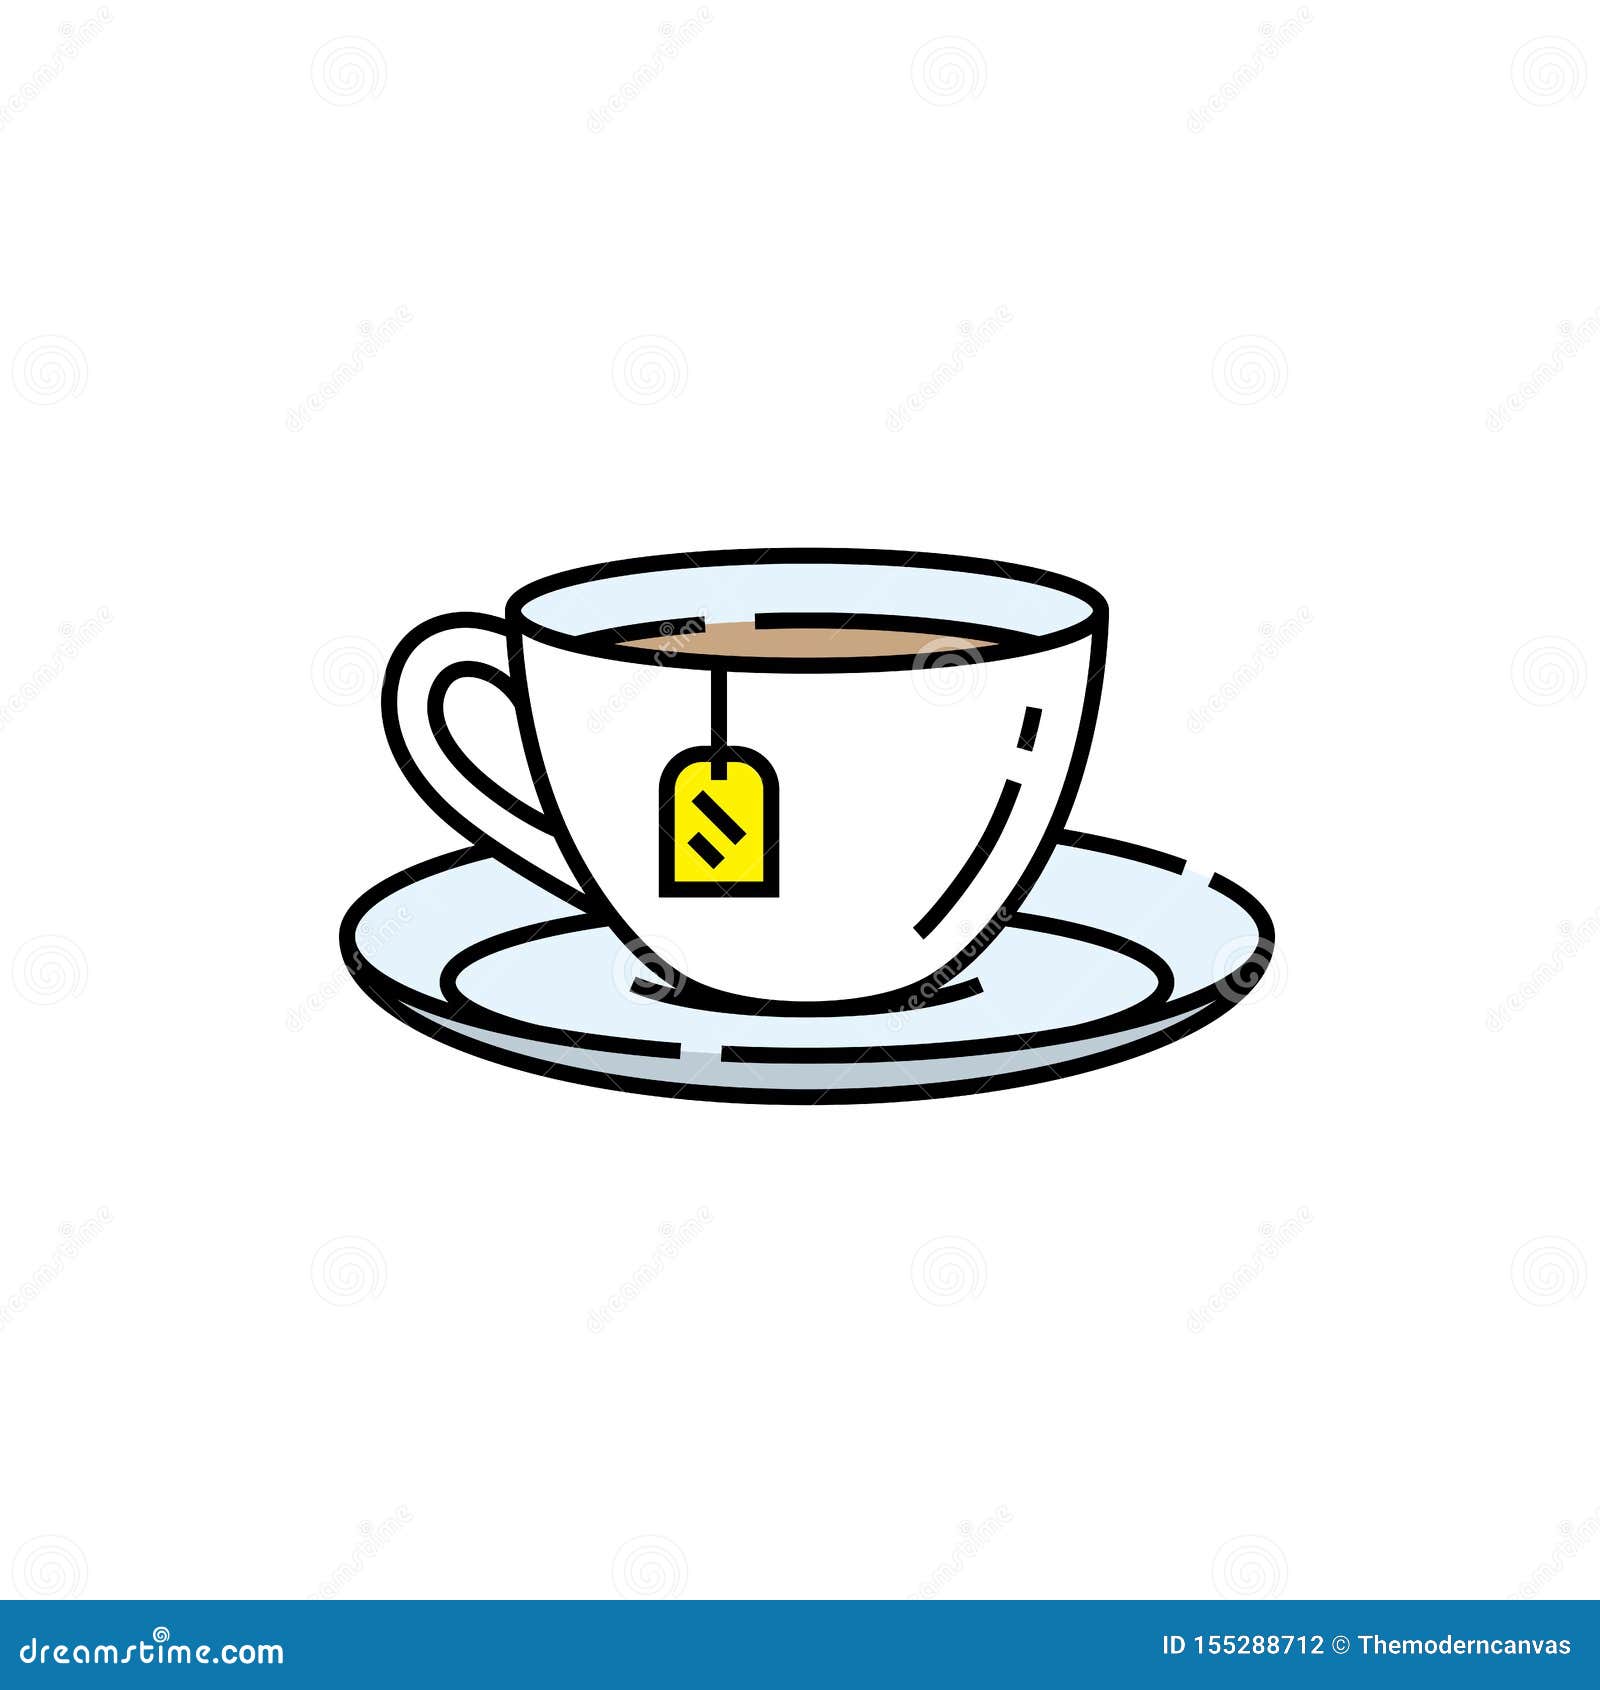 teacup line icon